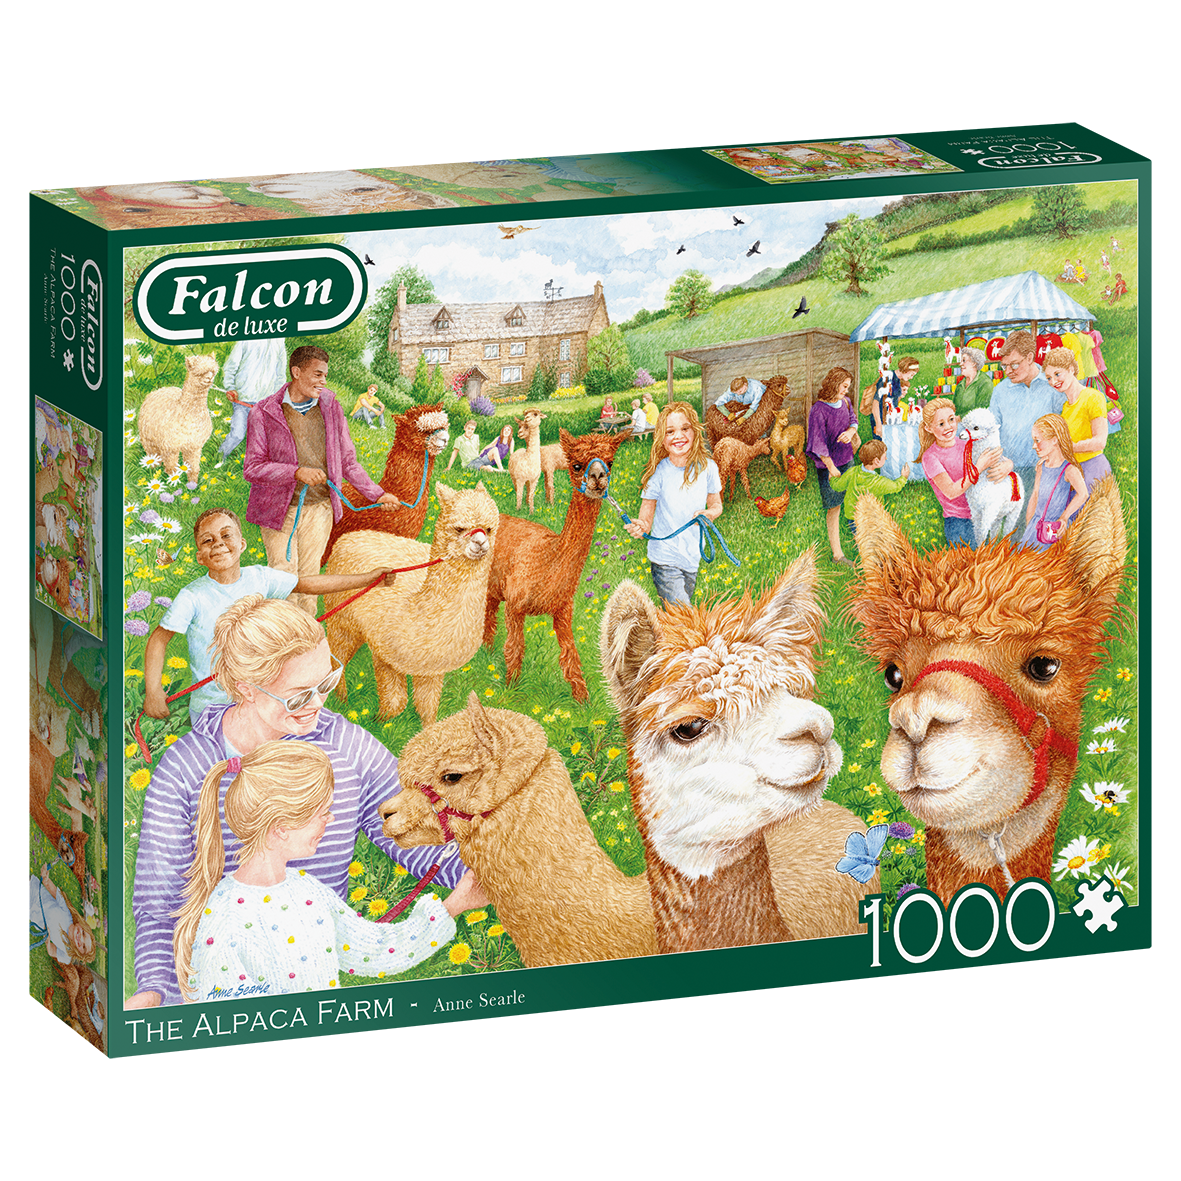 Falcon De luxe - The Alpaca Farm - 1000 Piece Jigsaw Puzzle